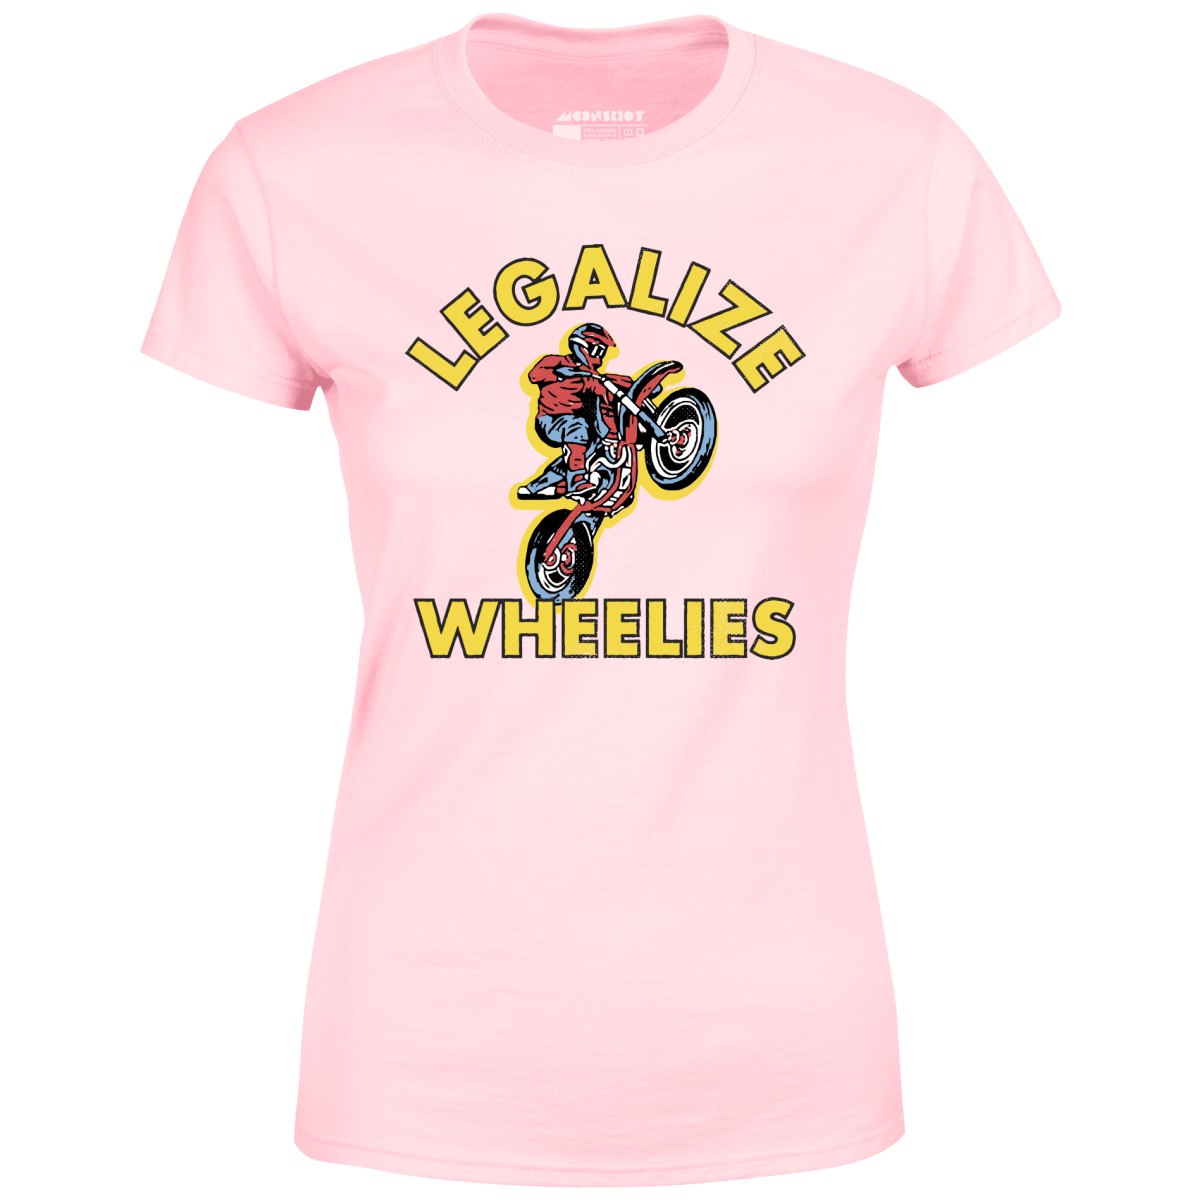 Legalize Wheelies - Women's T-Shirt